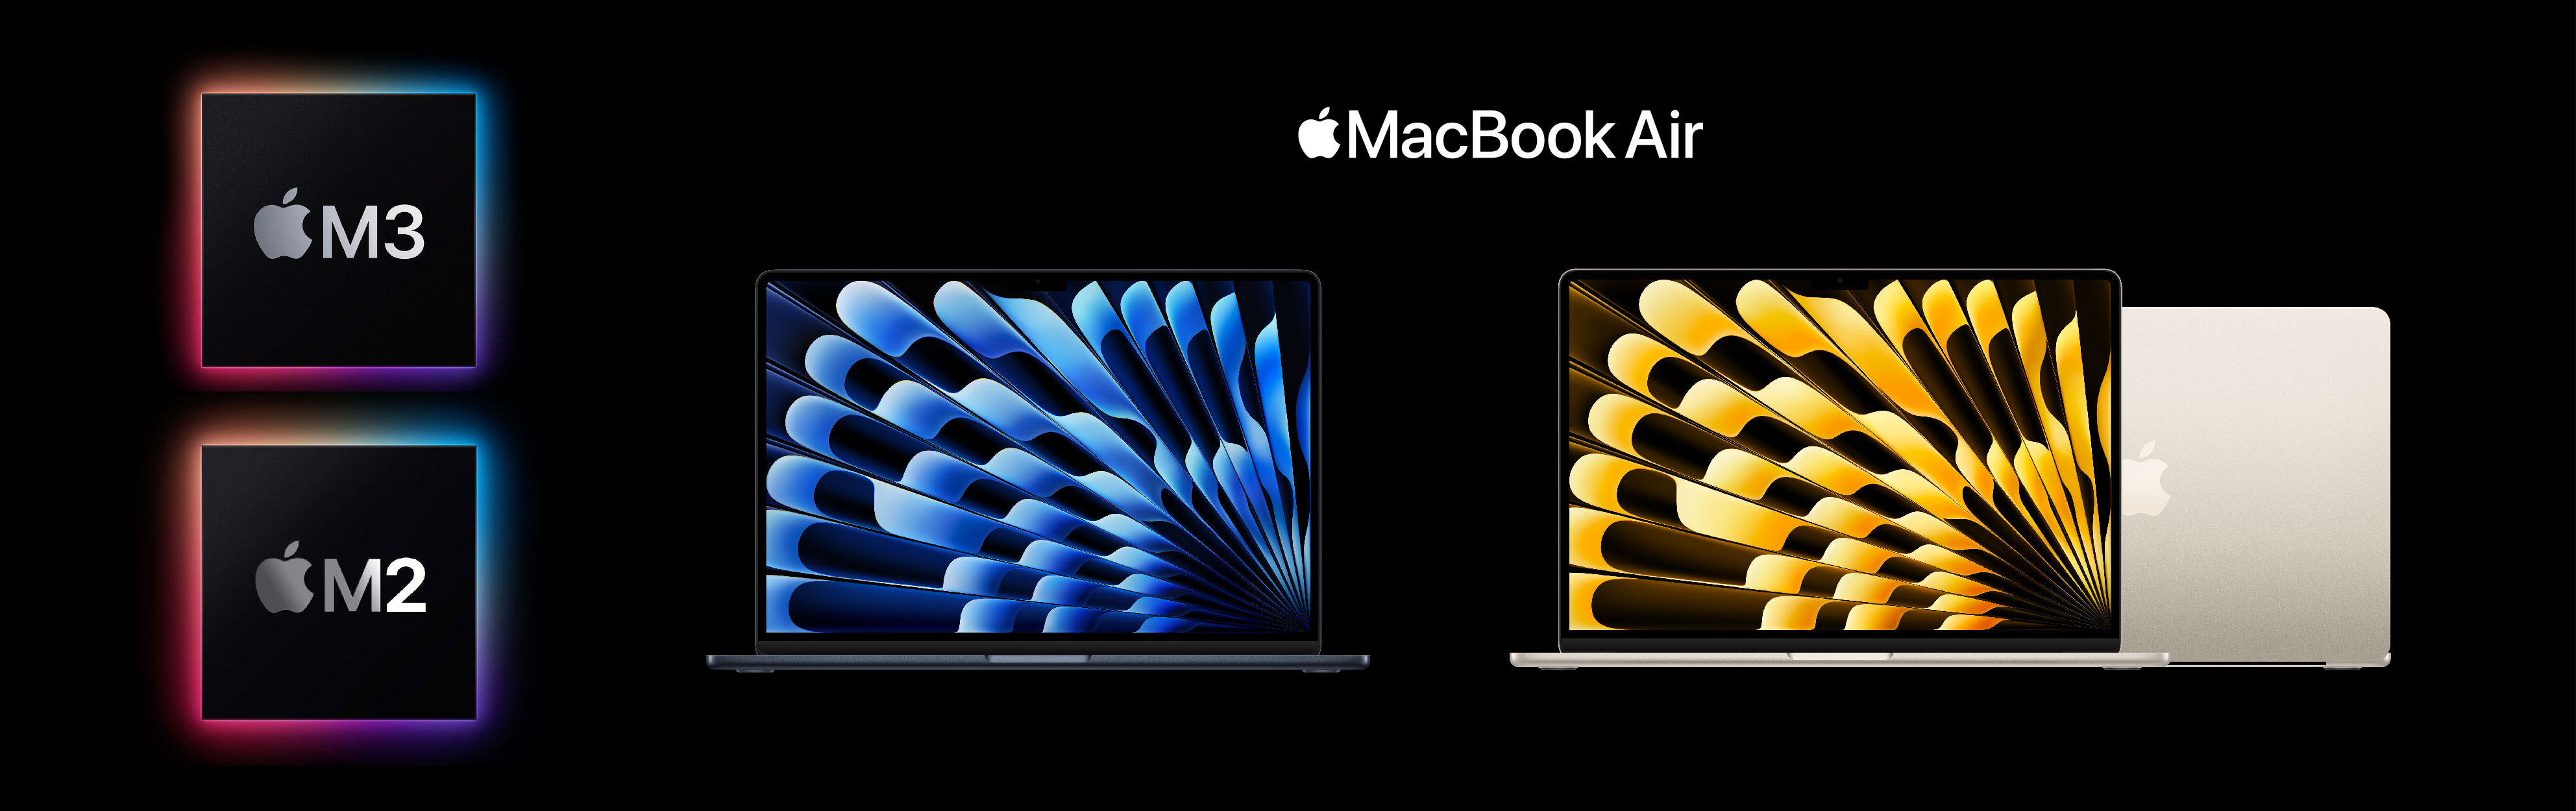 macBook Air m2 m3